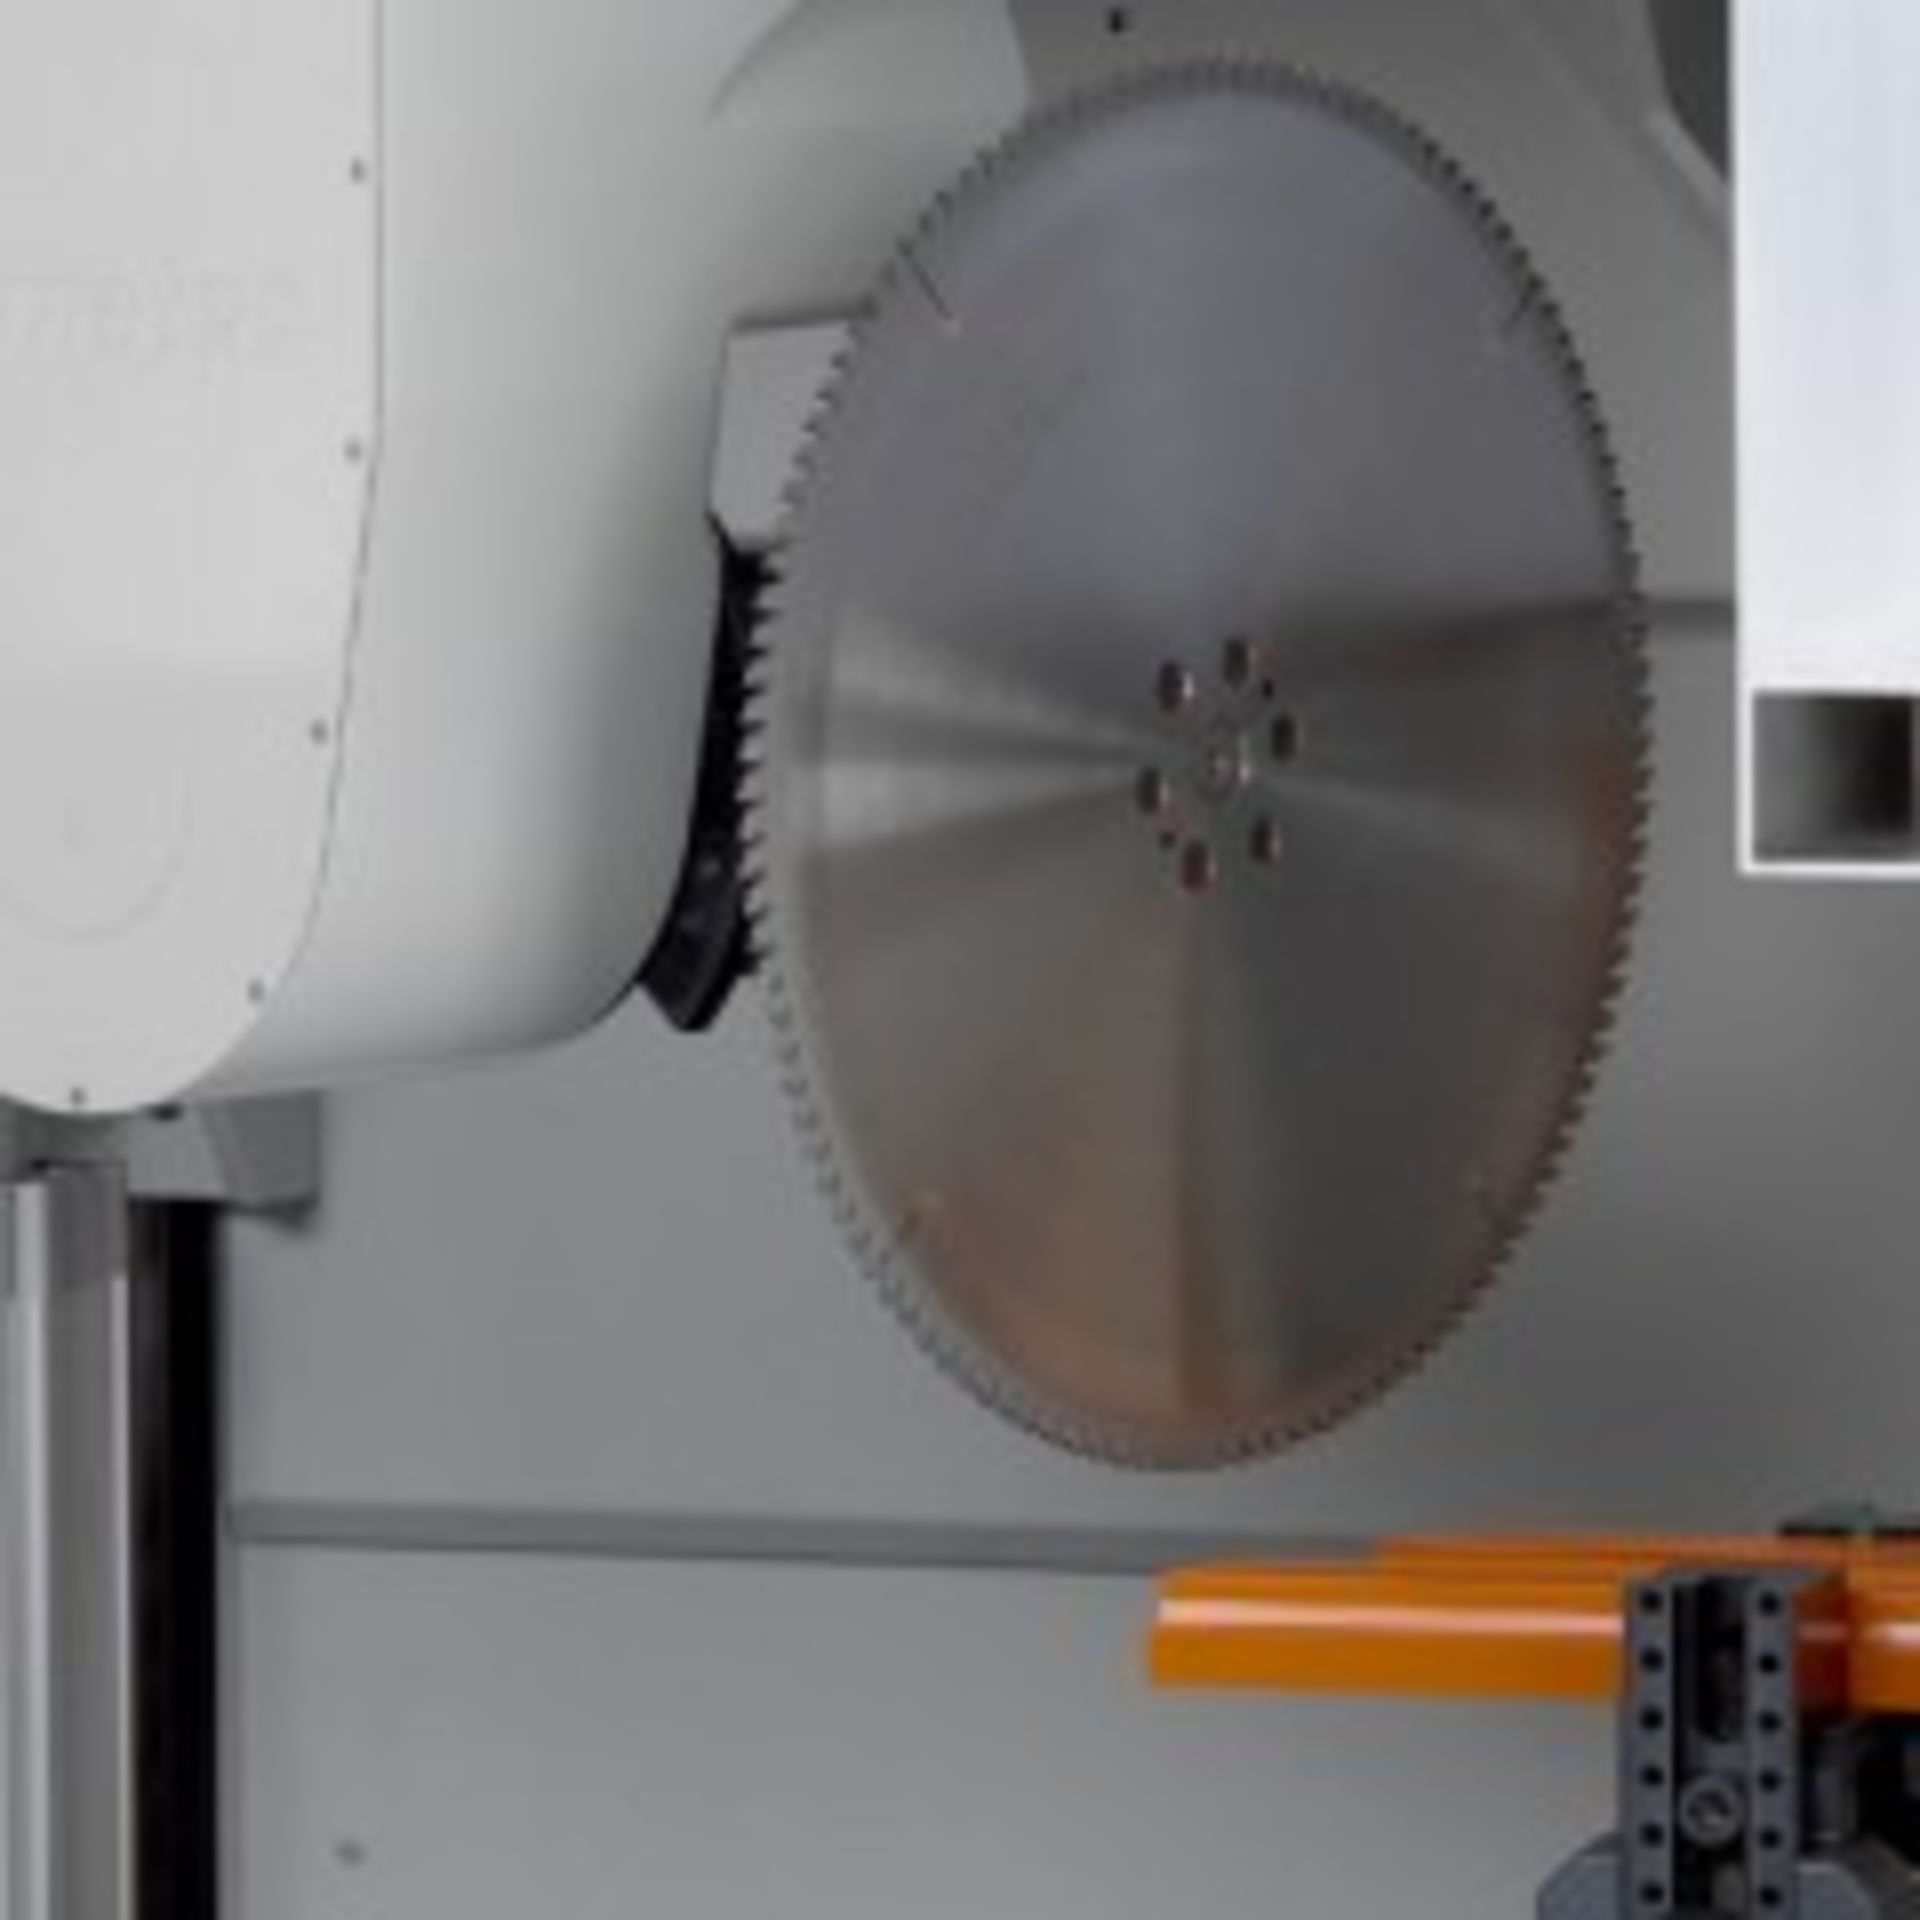 10 METER ELUMATEC SBZ 151 5-AXIS CNC PROFILE VERTICAL MACHINIG CENTER, NEW 2014 - Image 21 of 31